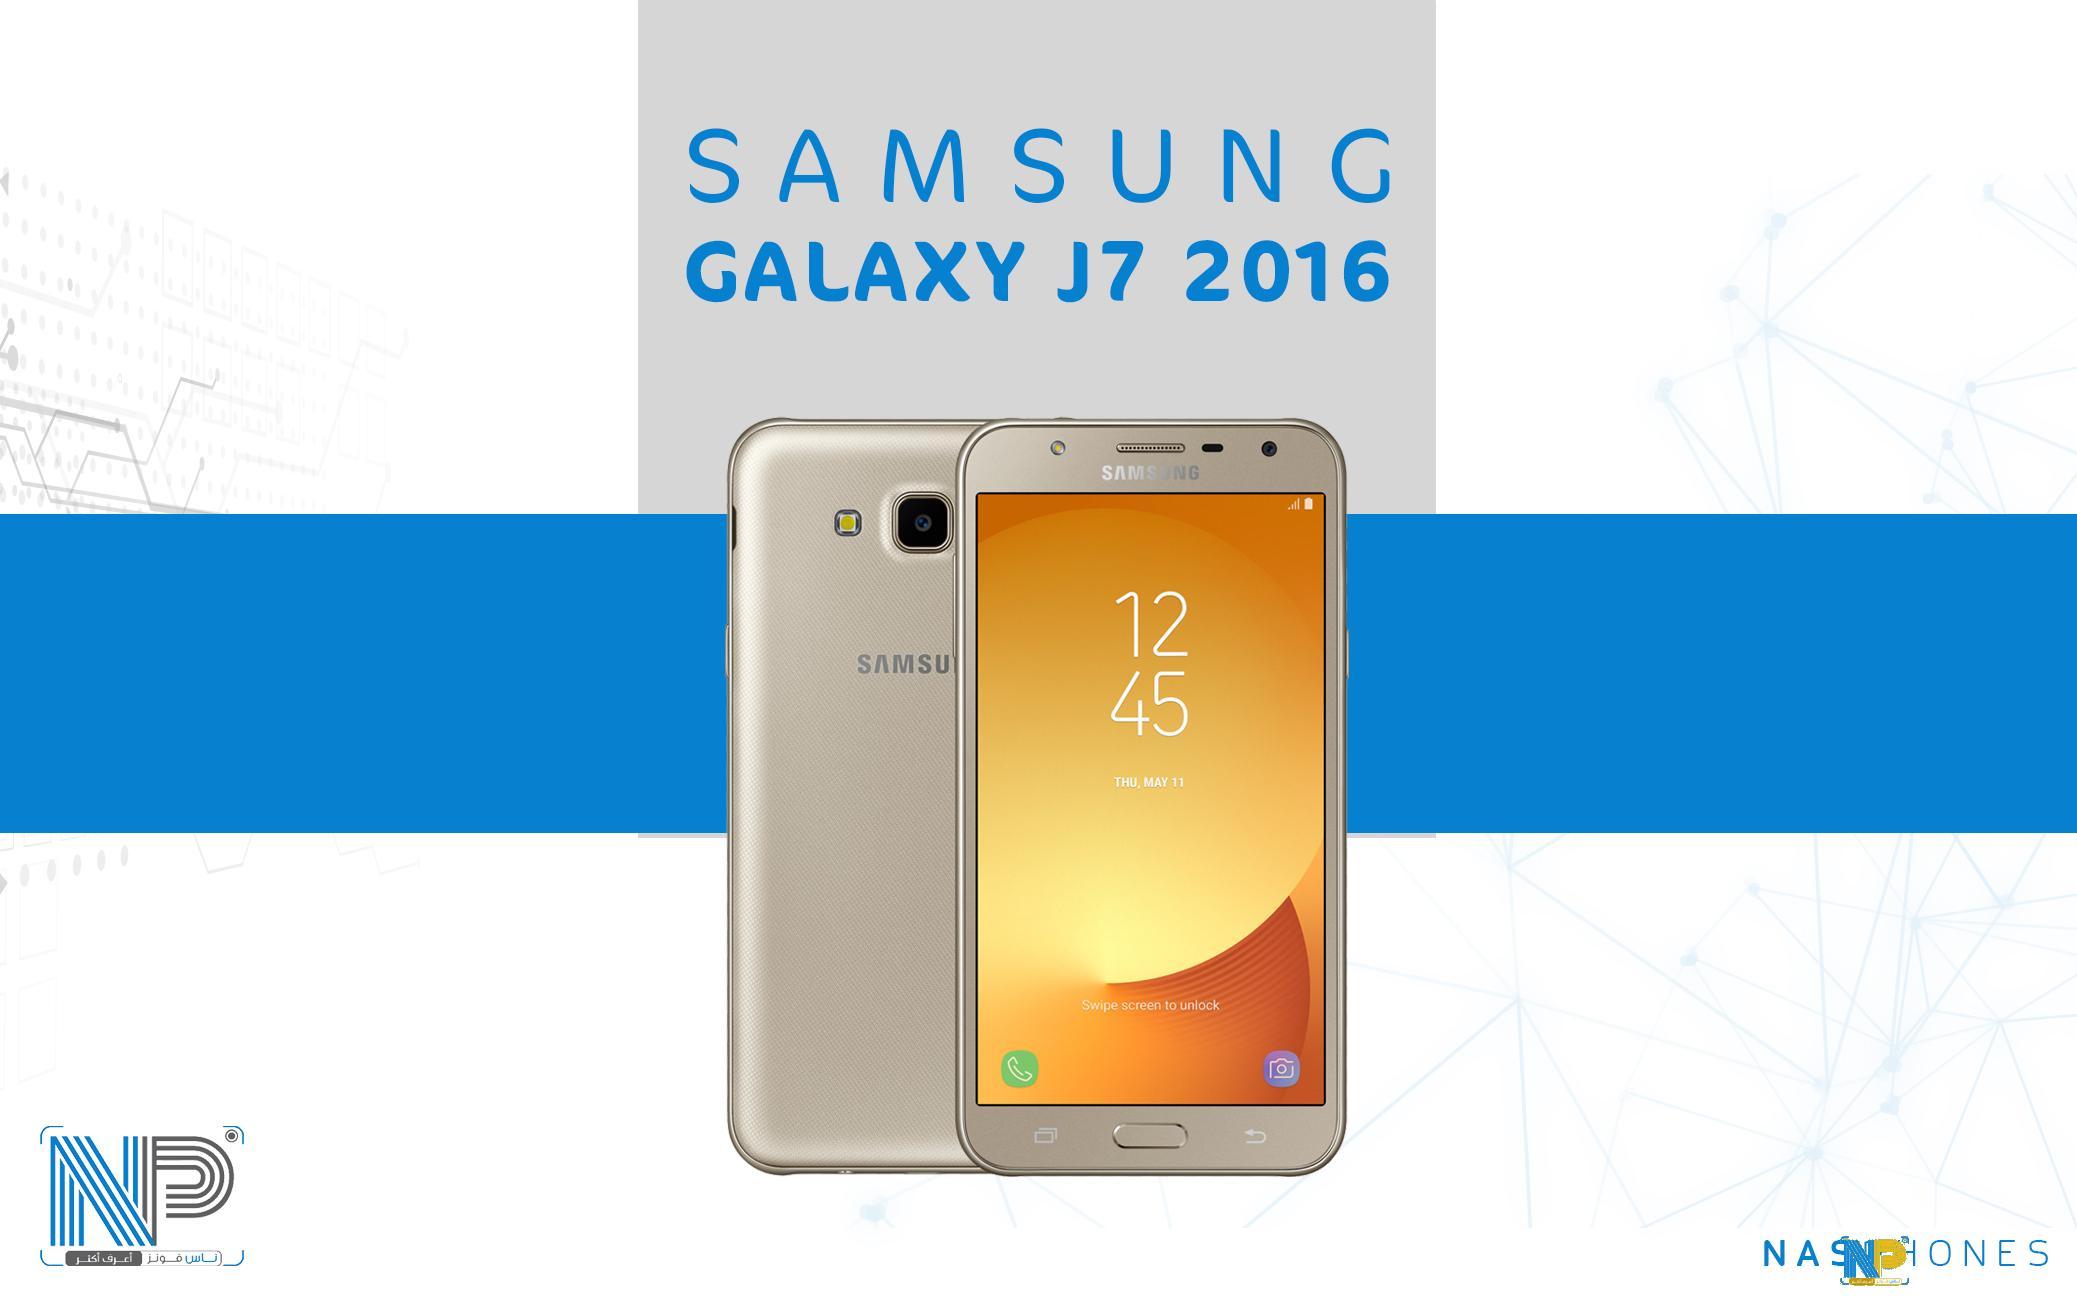 هاتف Samsung Galaxy J7 2016 